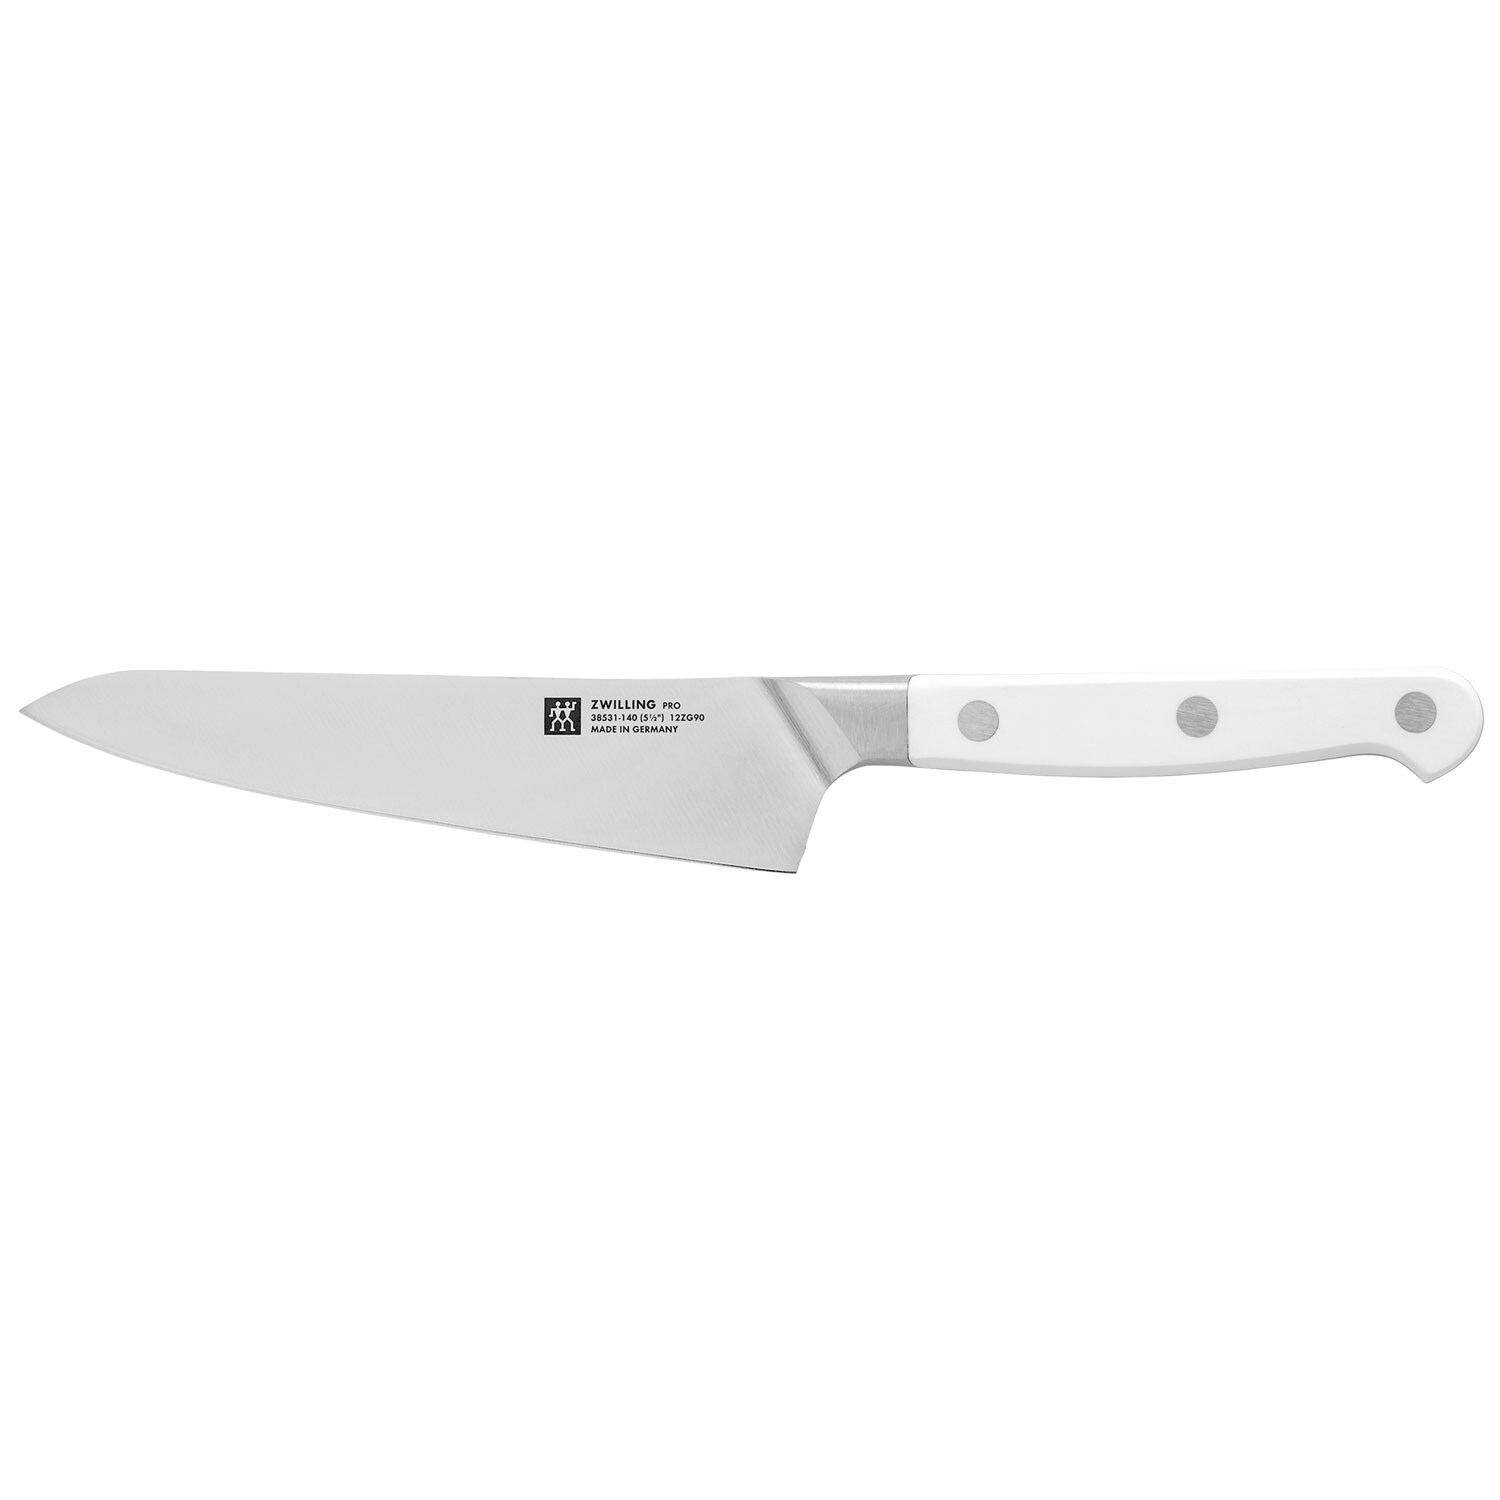 Zwilling Pro Le Blanc Kompakt Kockkniv 14 Cm - Kockknivar Rostfritt Stål Vit